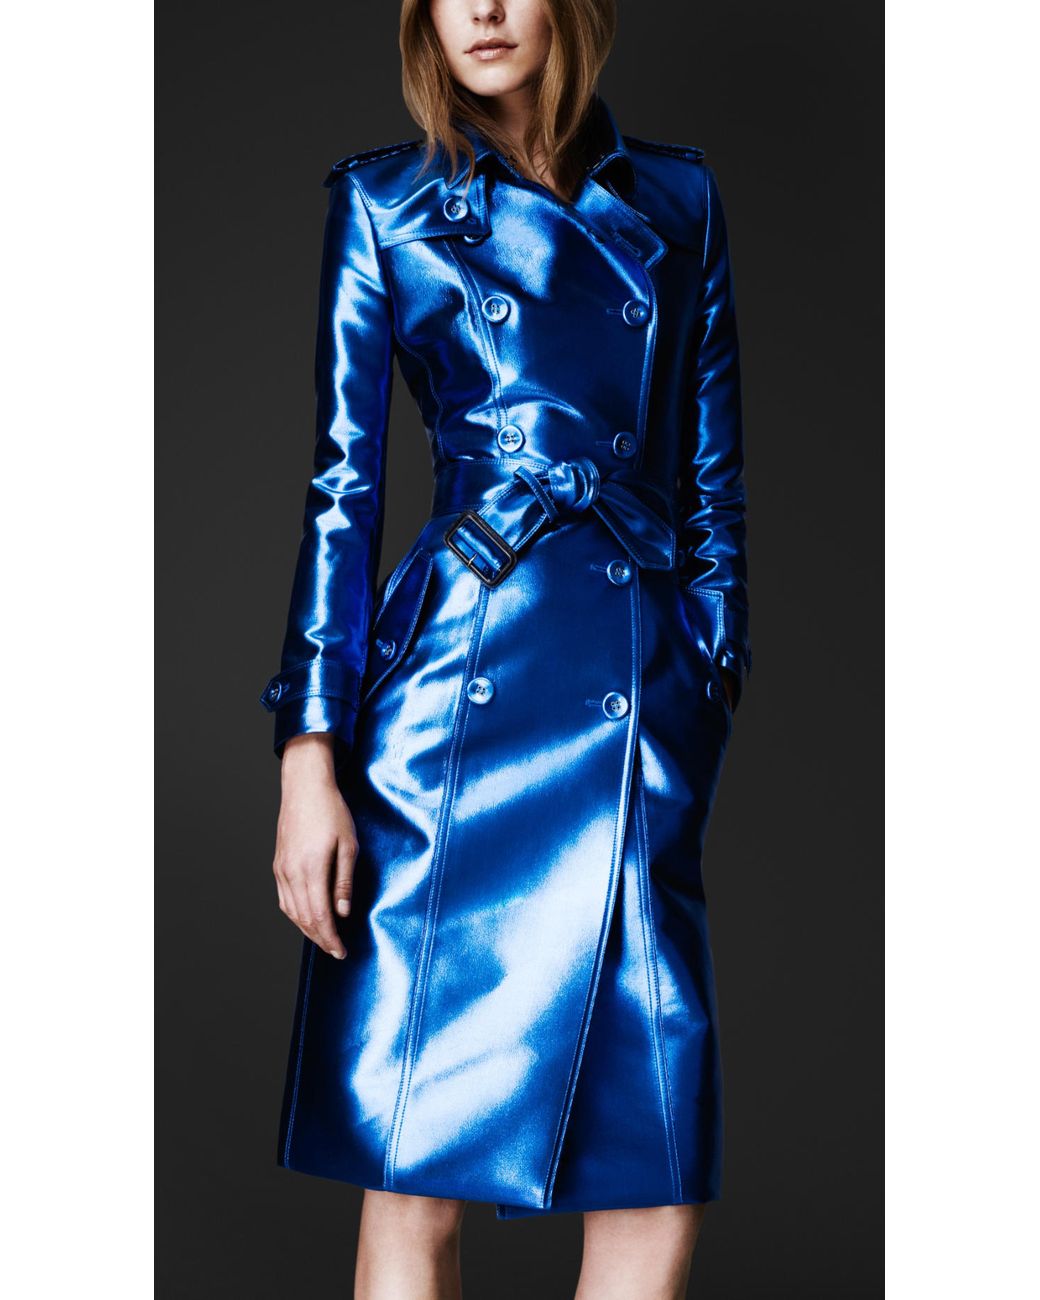 Burberry Prorsum Bright Metallic Trench Coat in Blue | Lyst